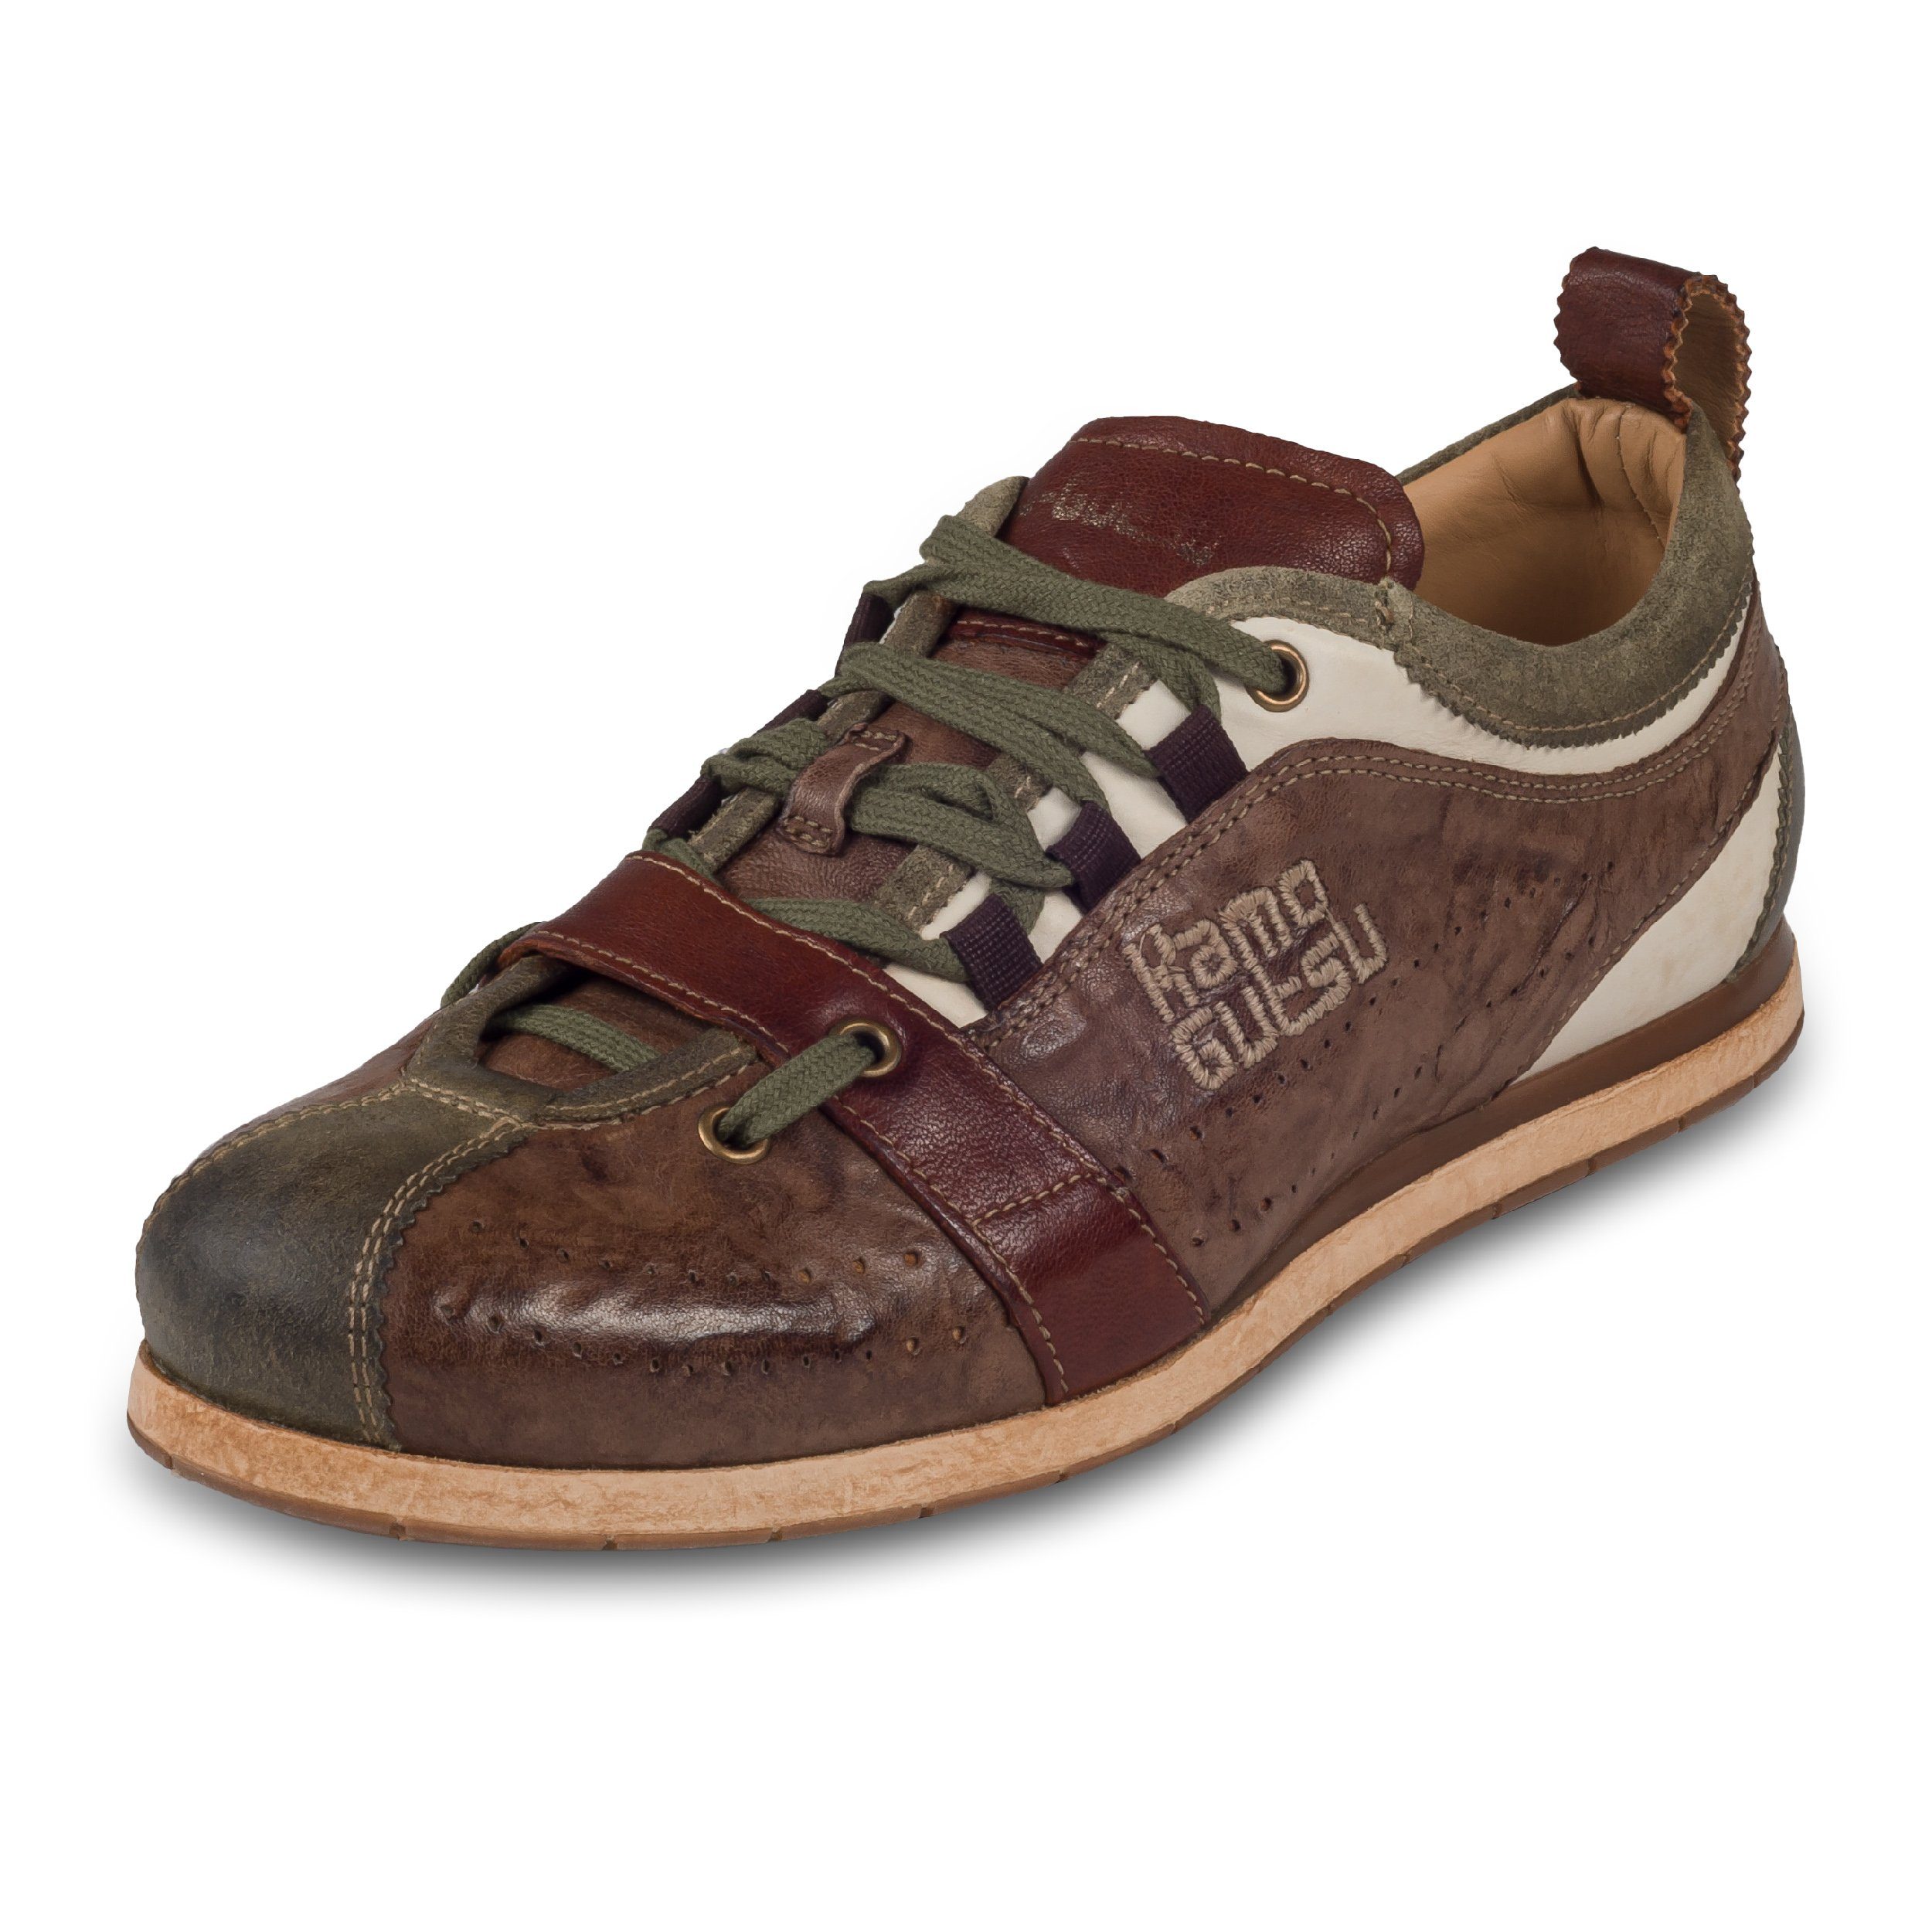 Kamo-Gutsu Herren Leder Sneaker, braun / grün (TIFO-017 fango marrone)  Sneaker Handgefertigt in Italien